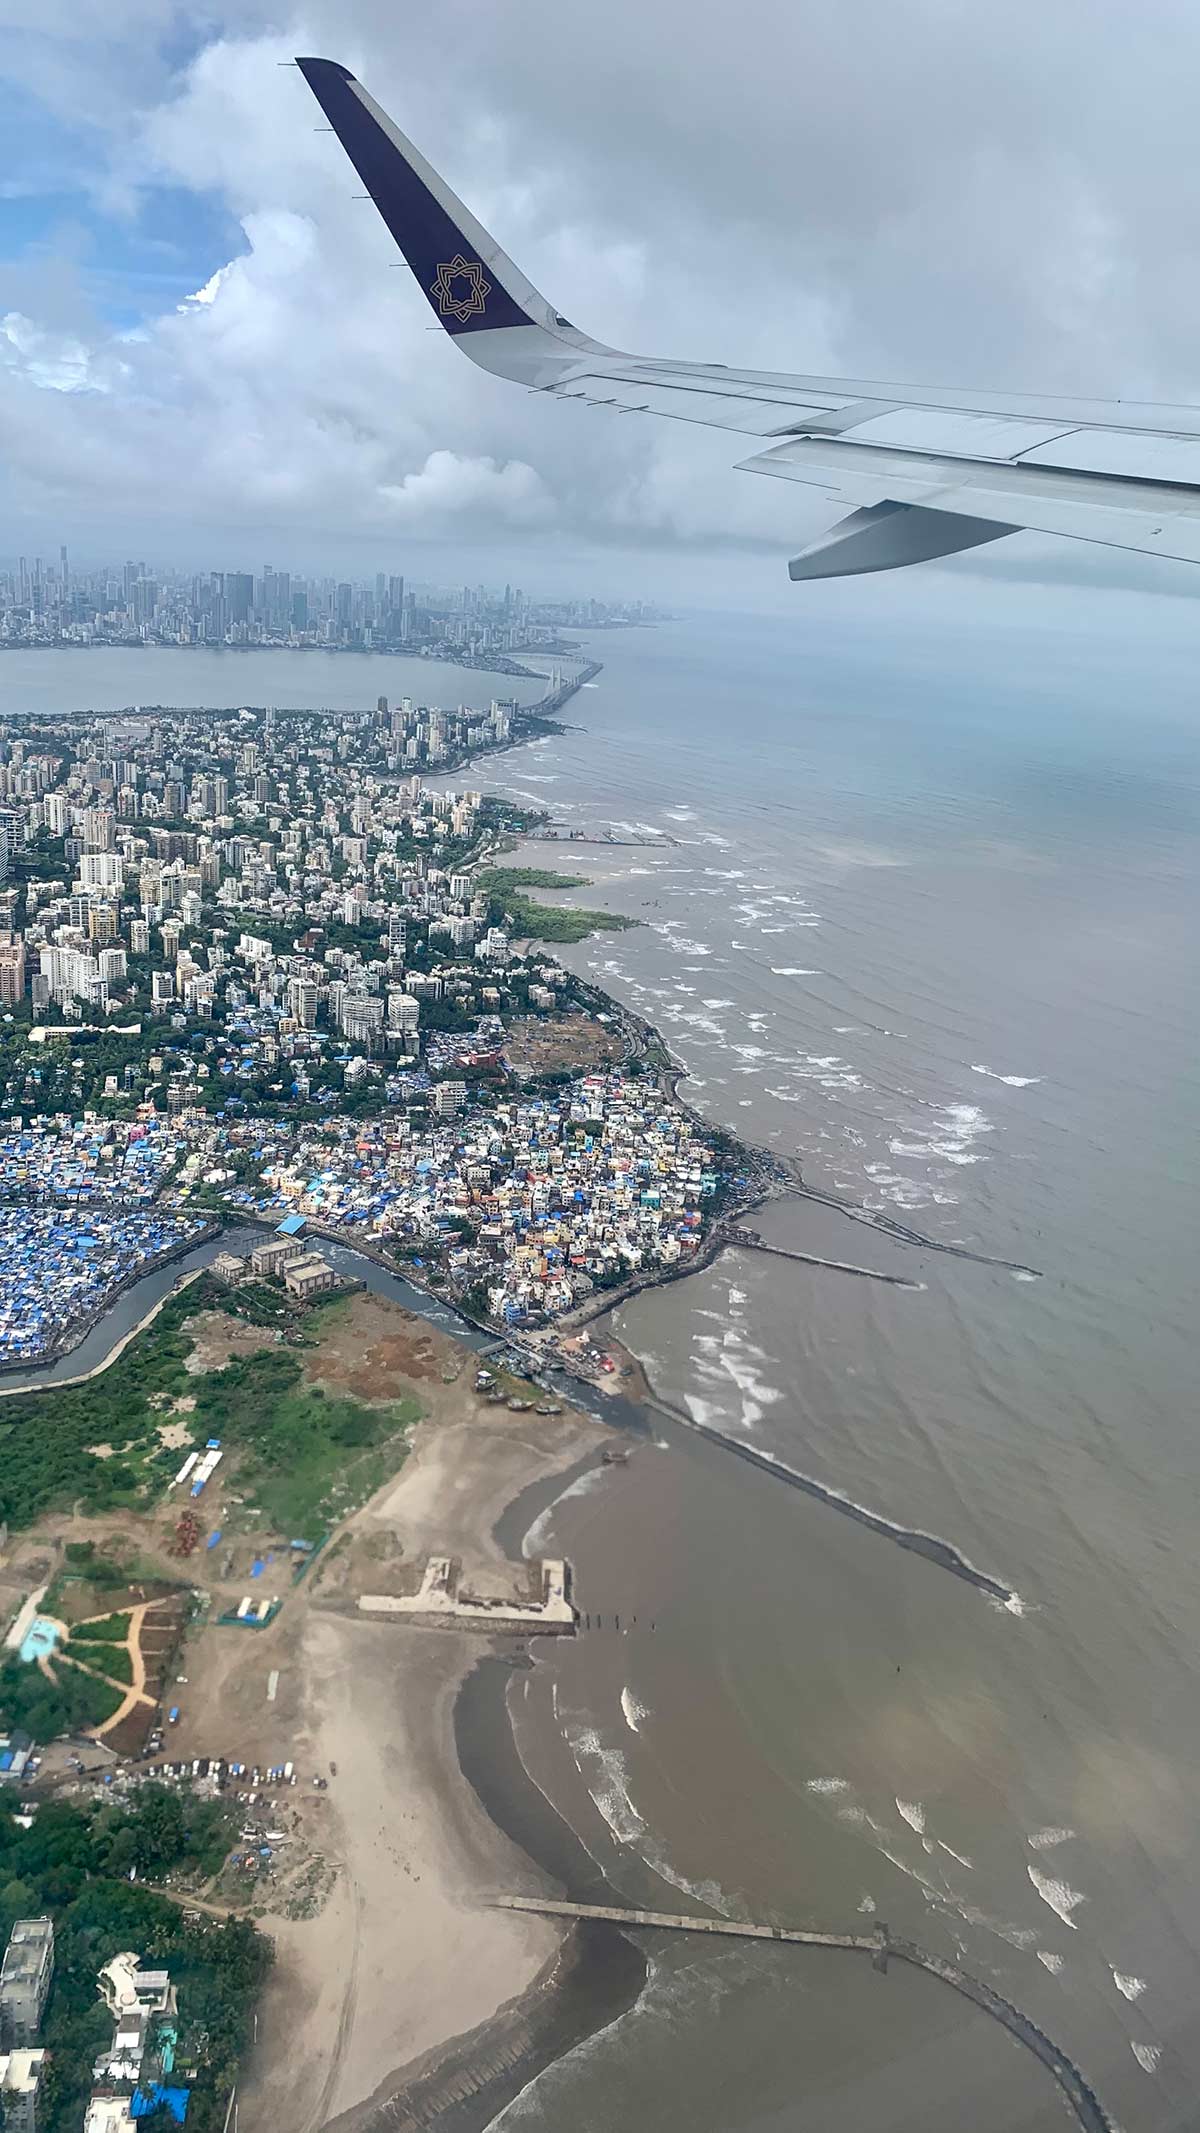 Mumbai's amazing coastline